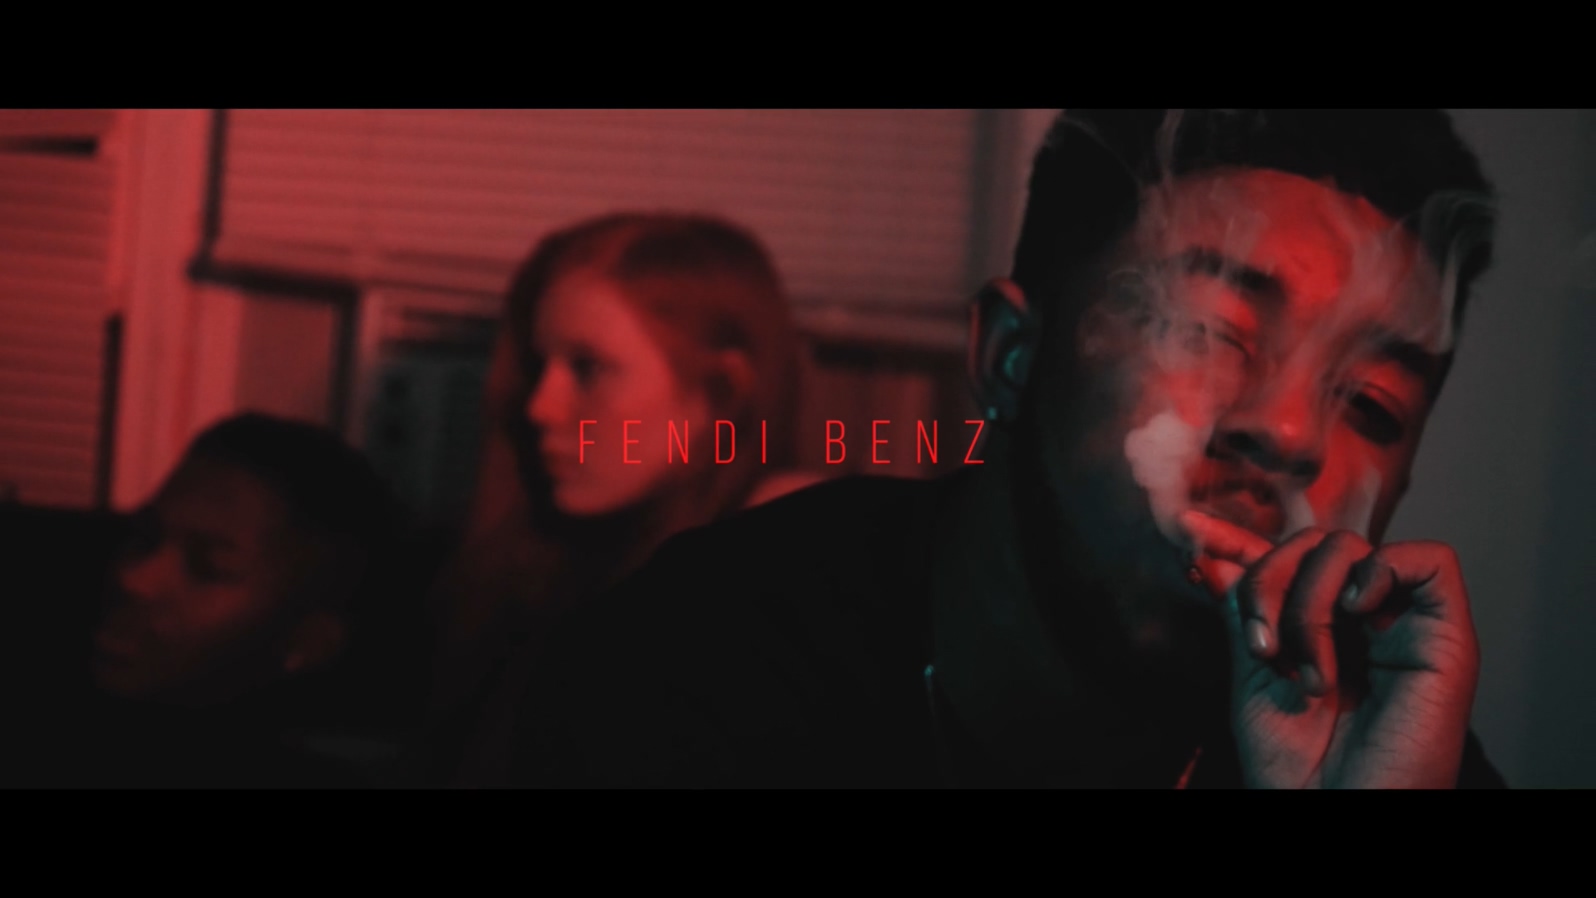 Fendi Benz - Who Are You - 1080p